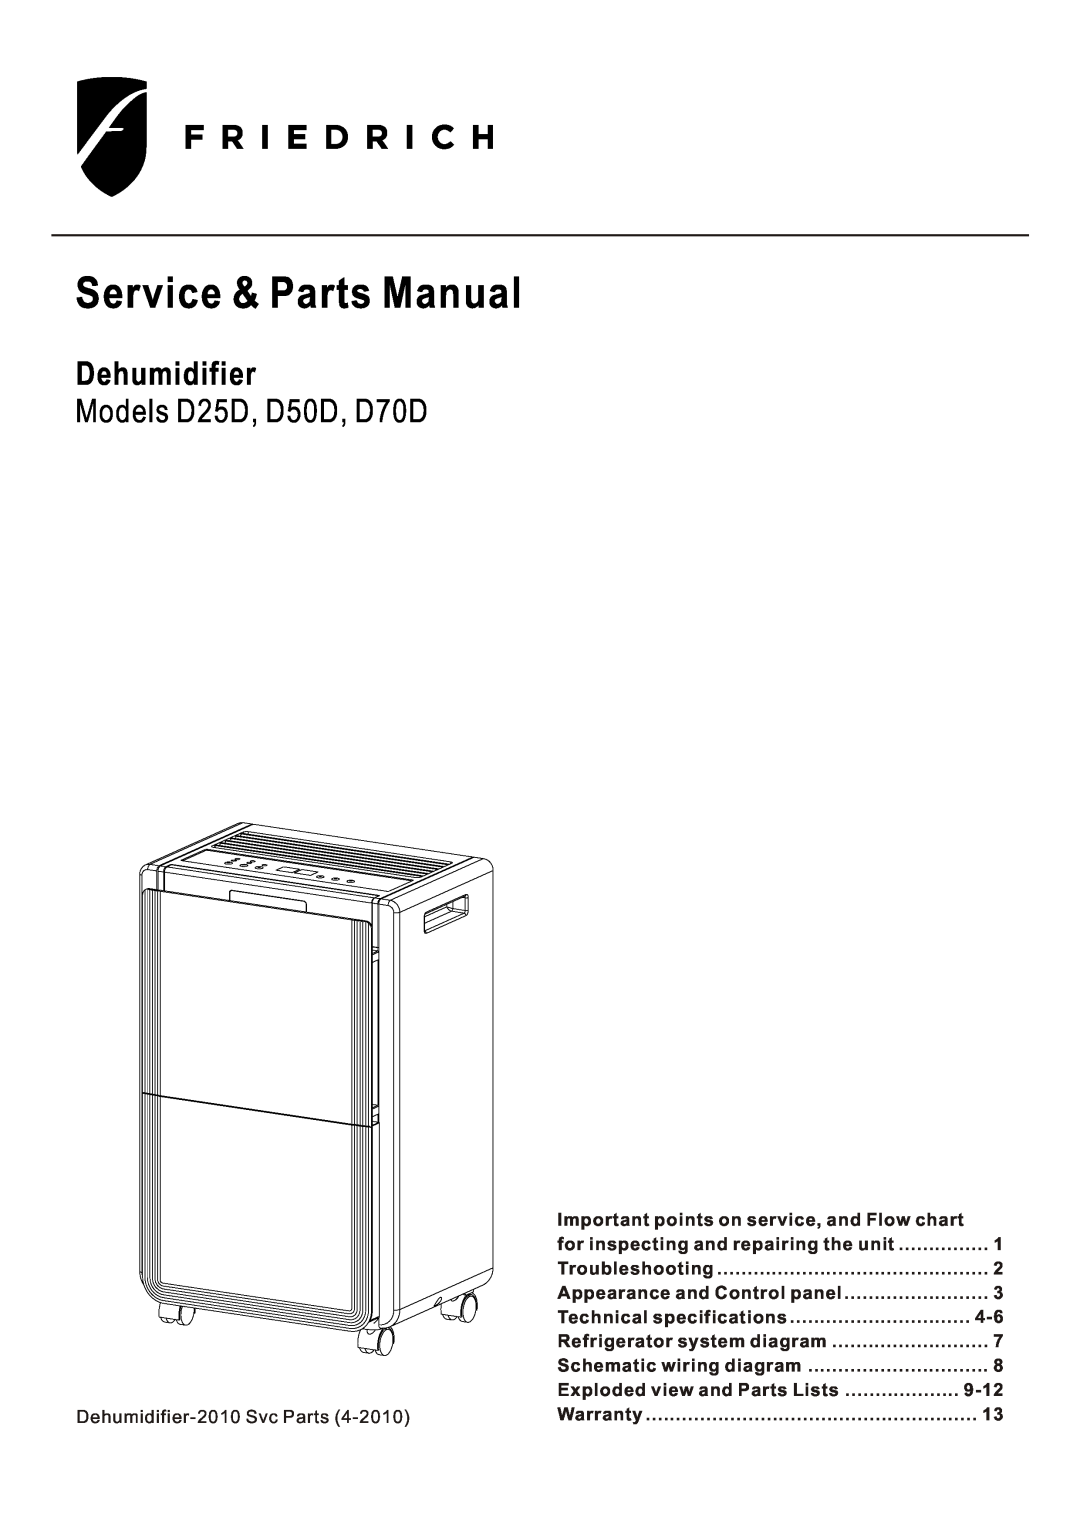 Friedrich Dehumidifier, D525 technical specifications Service & Parts Manual, Models D25D, D50D, D70D 